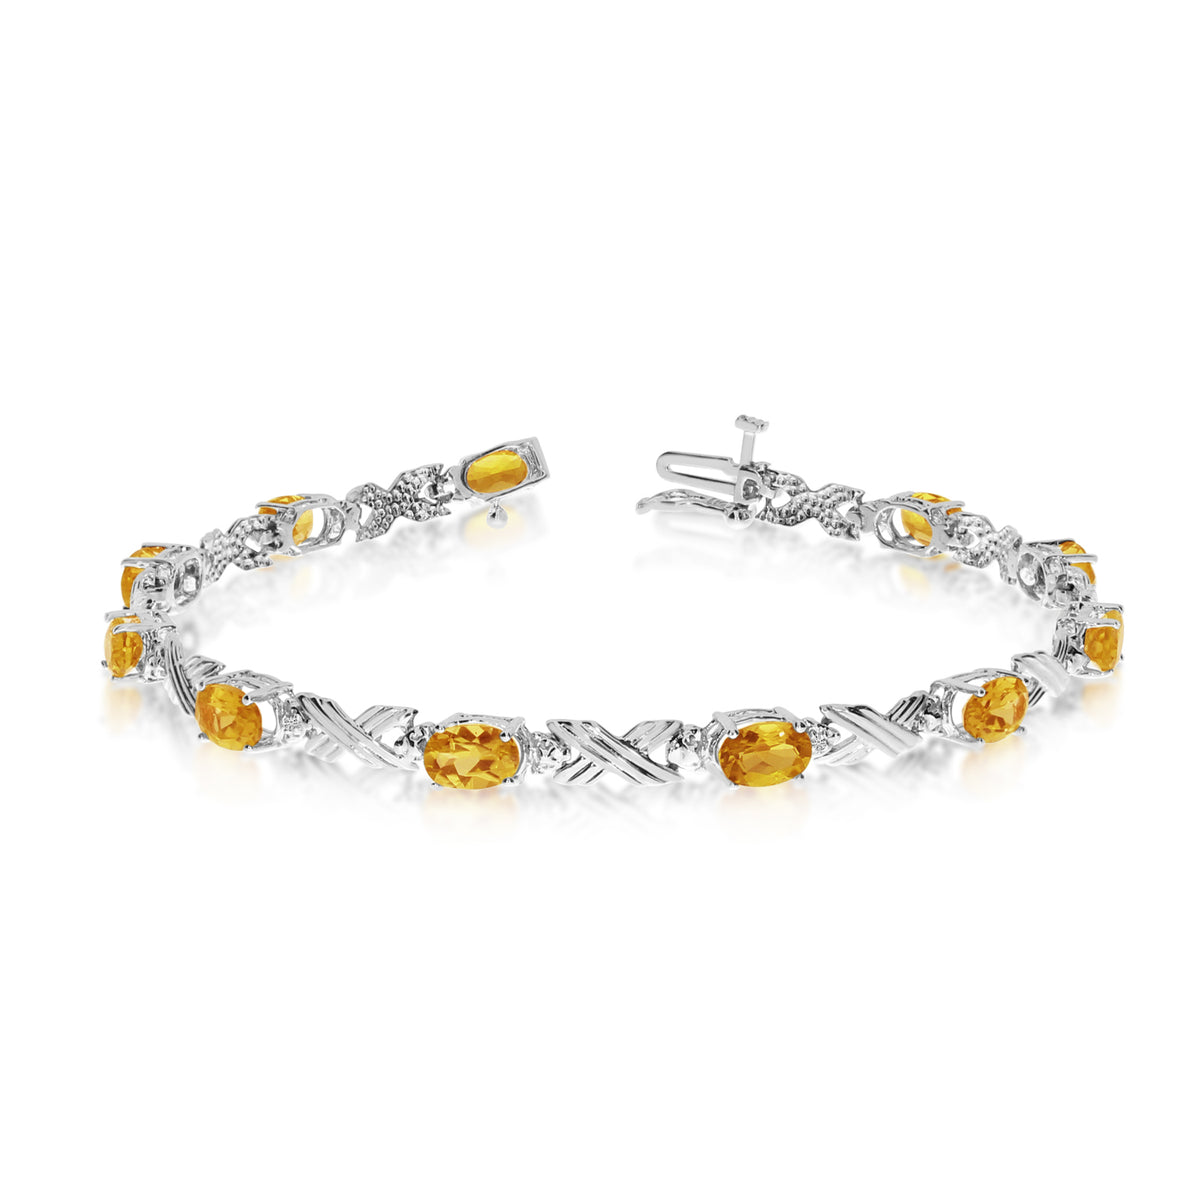 10K White Gold Oval Citrine Stones And Diamonds Tennis Bracelet, 7" fine designer jewelry for men and women